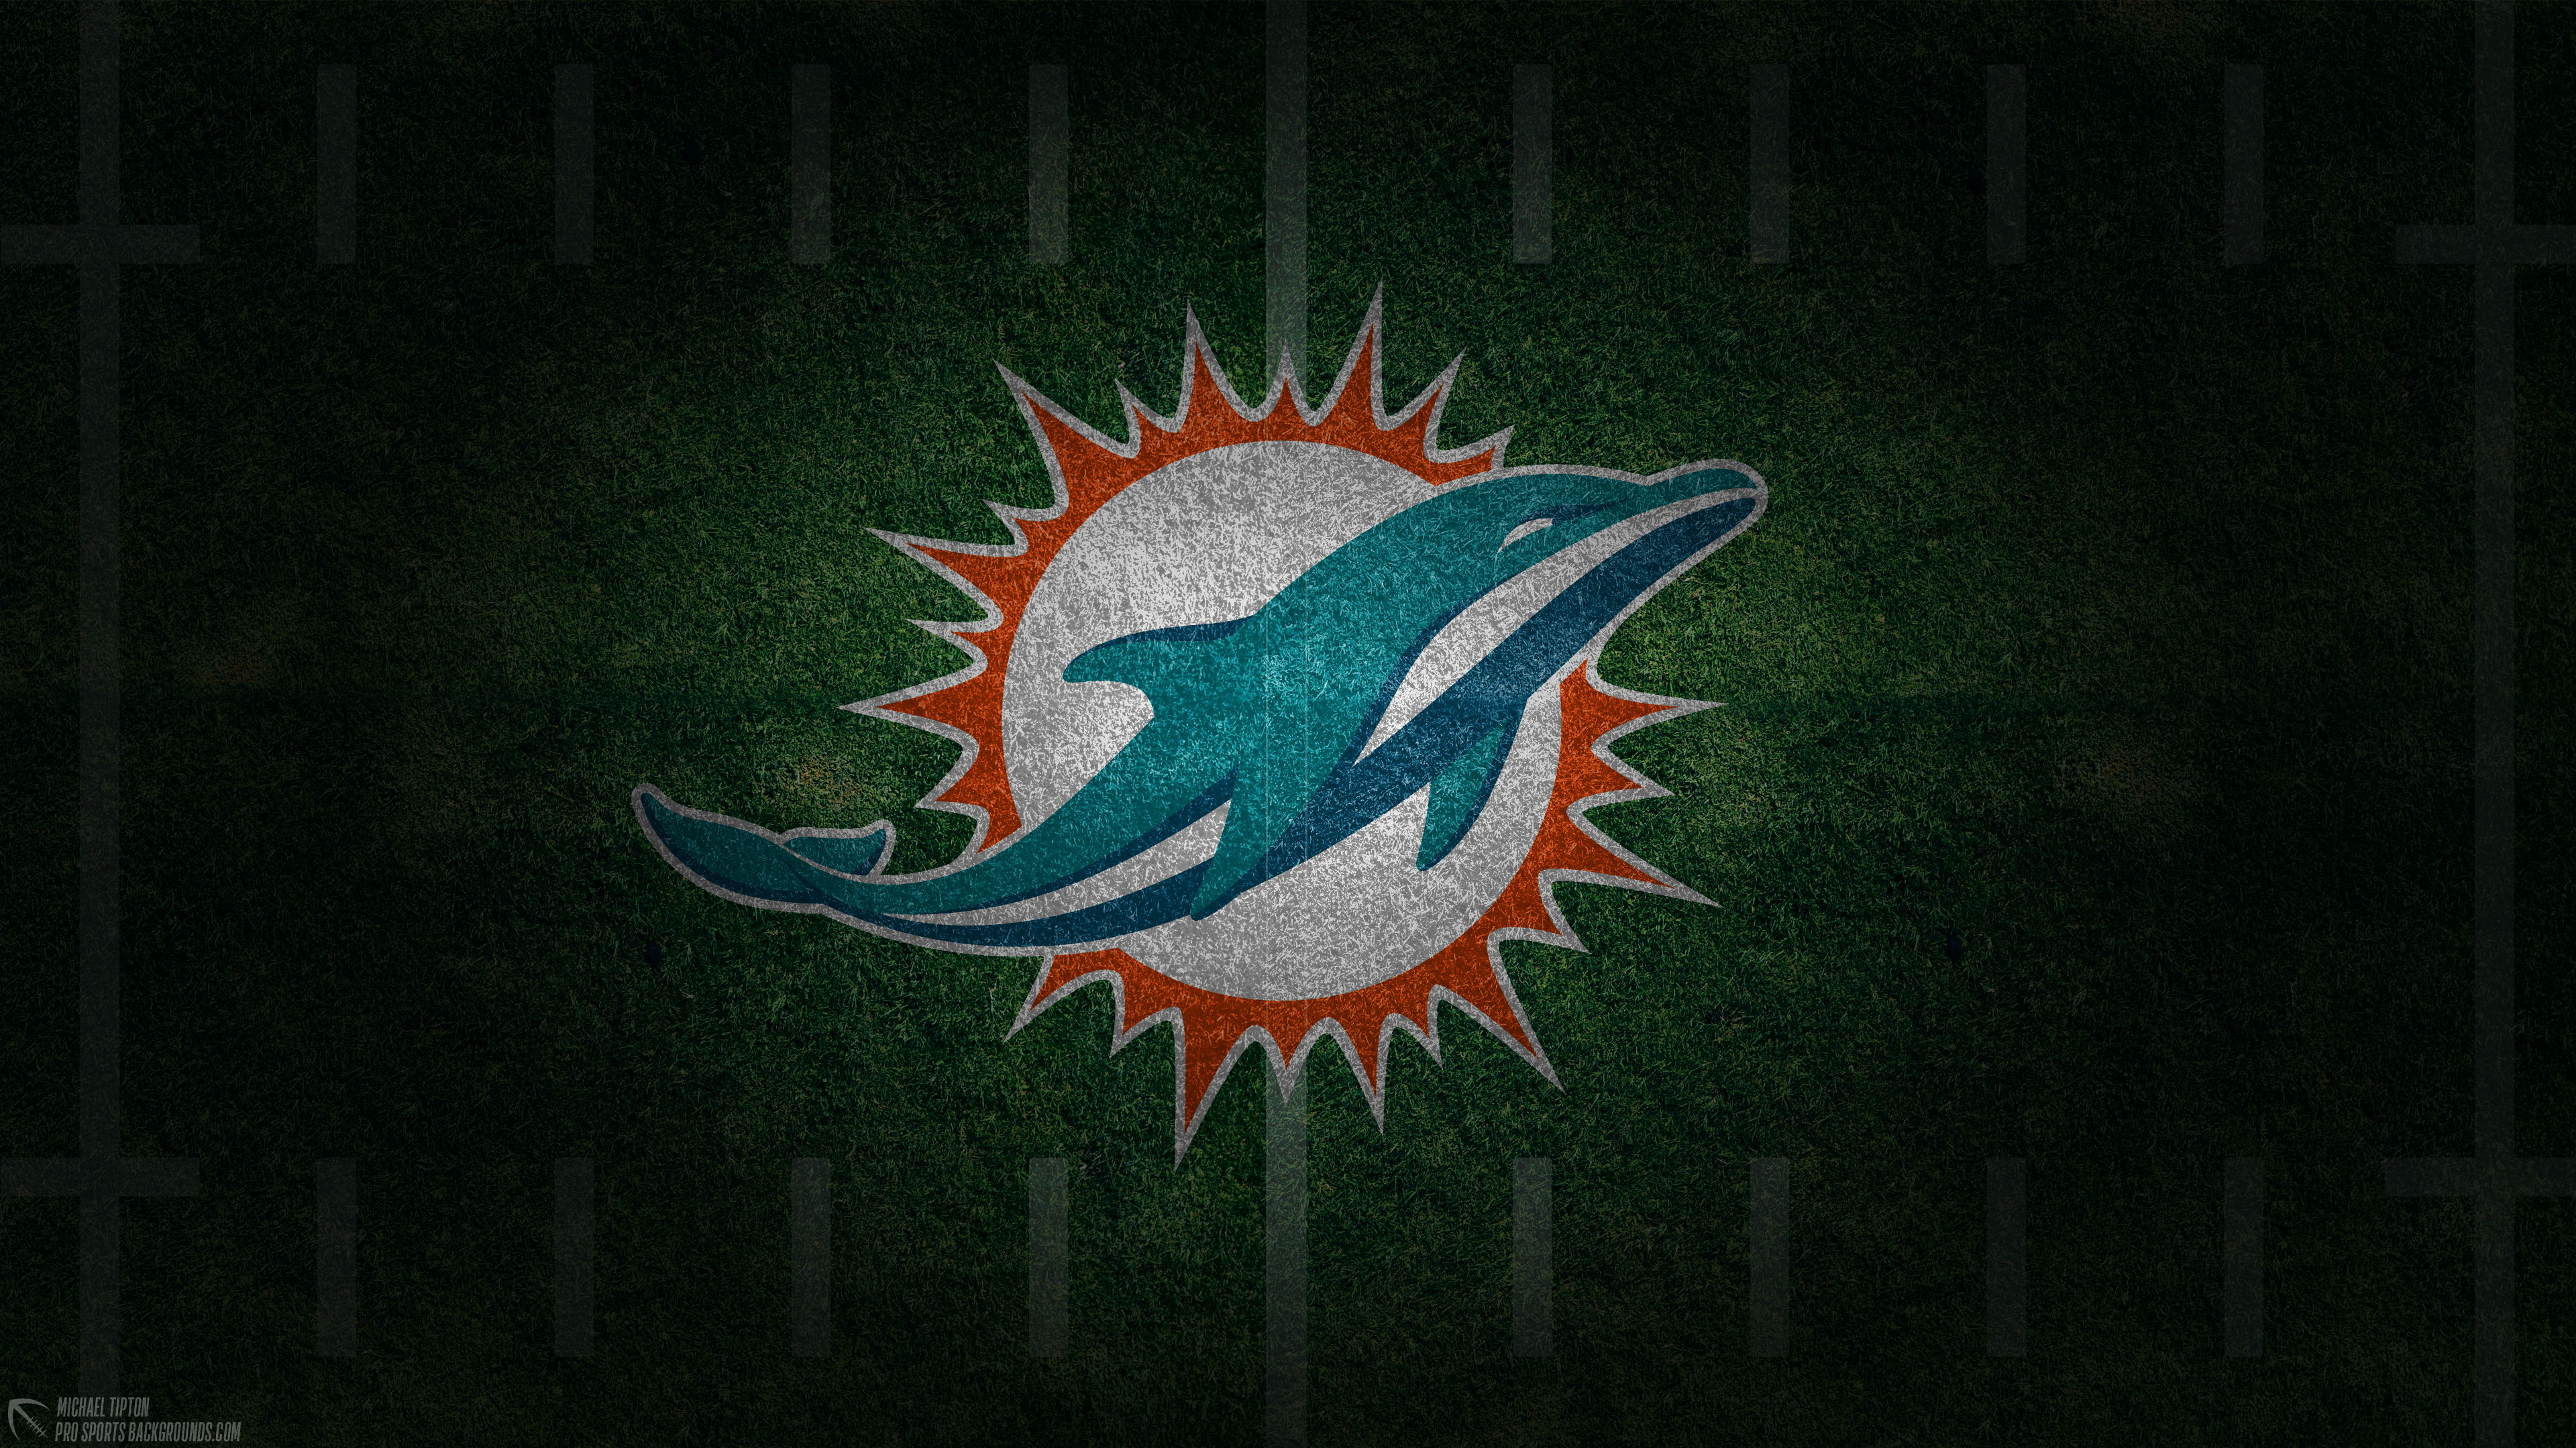 Miami Dolphins Wallpaper Pro Sports Background